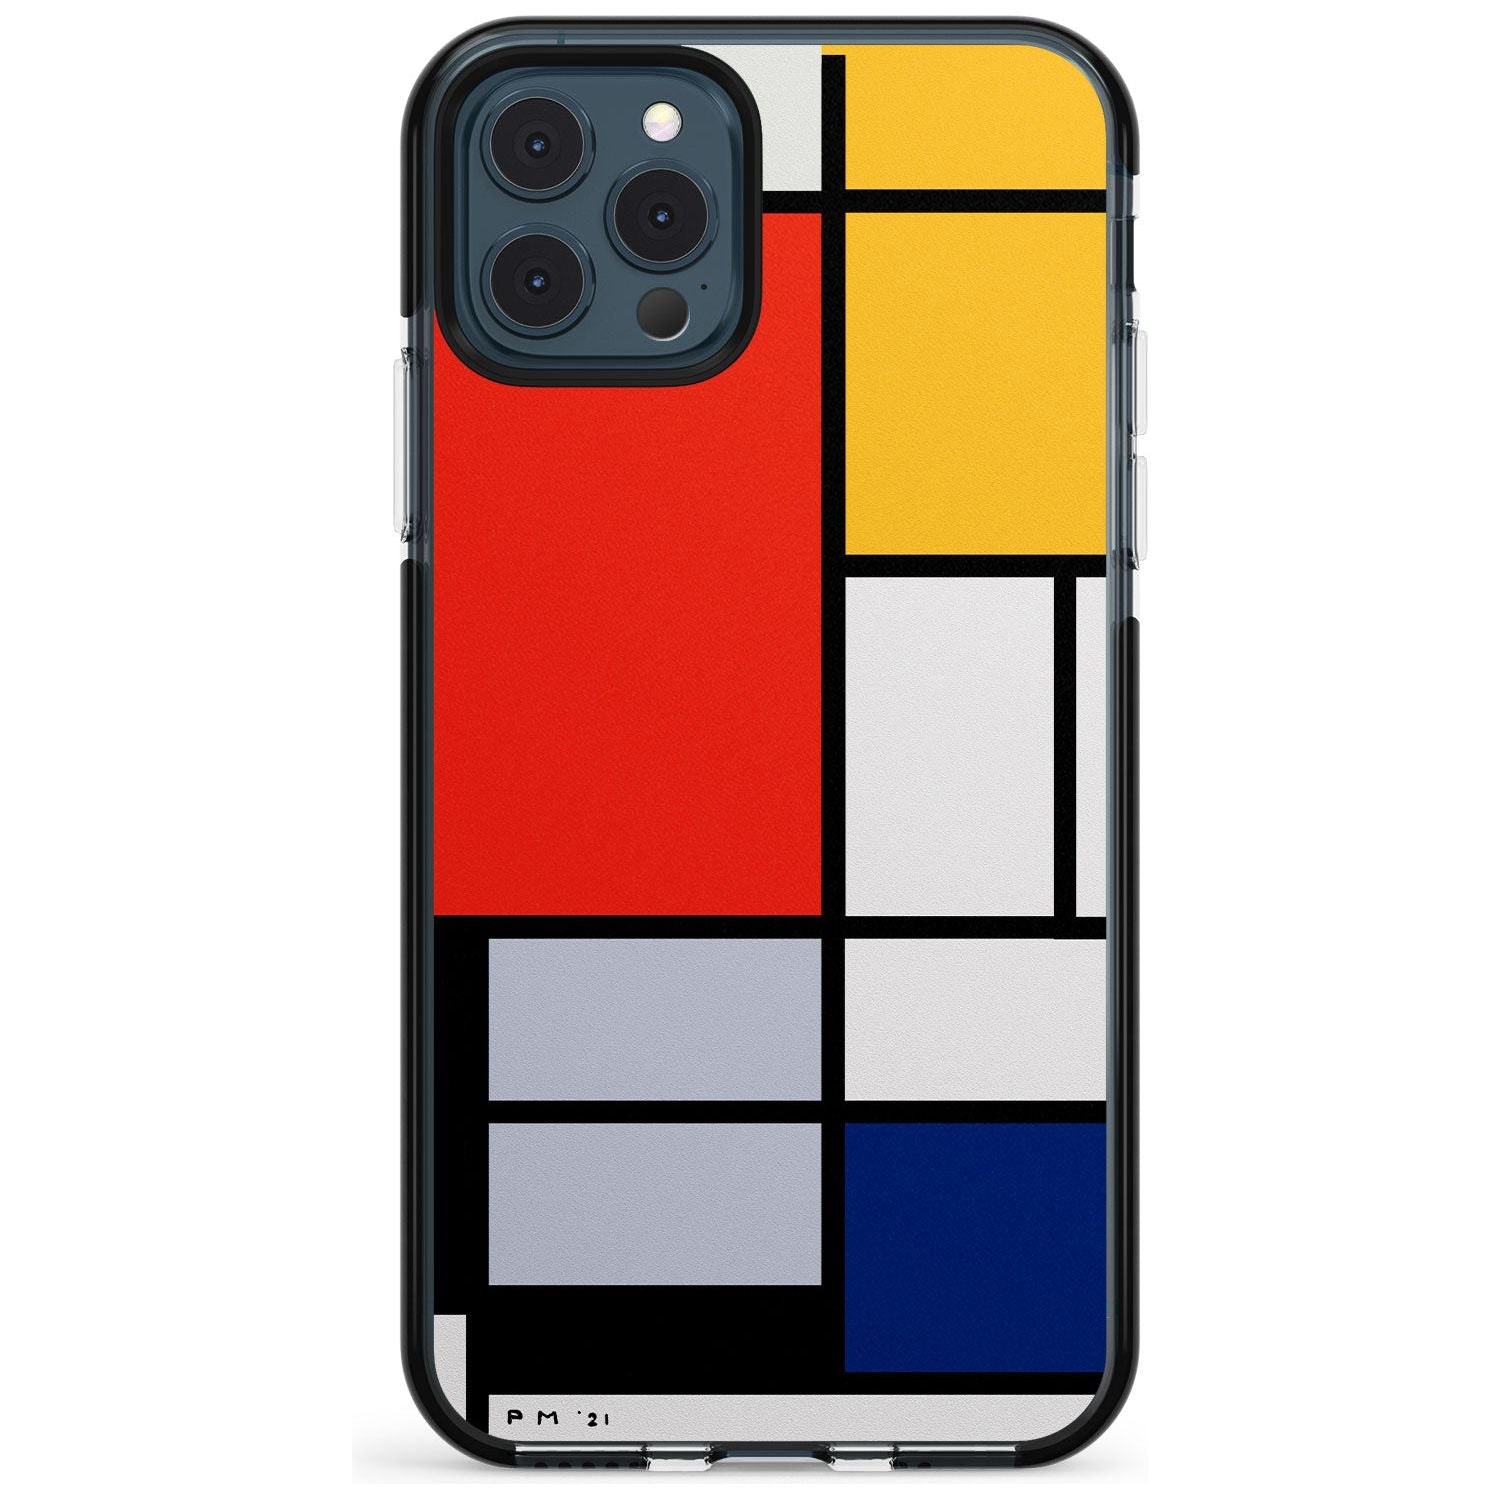 Piet Mondrian's Composition Black Impact Phone Case for iPhone 11